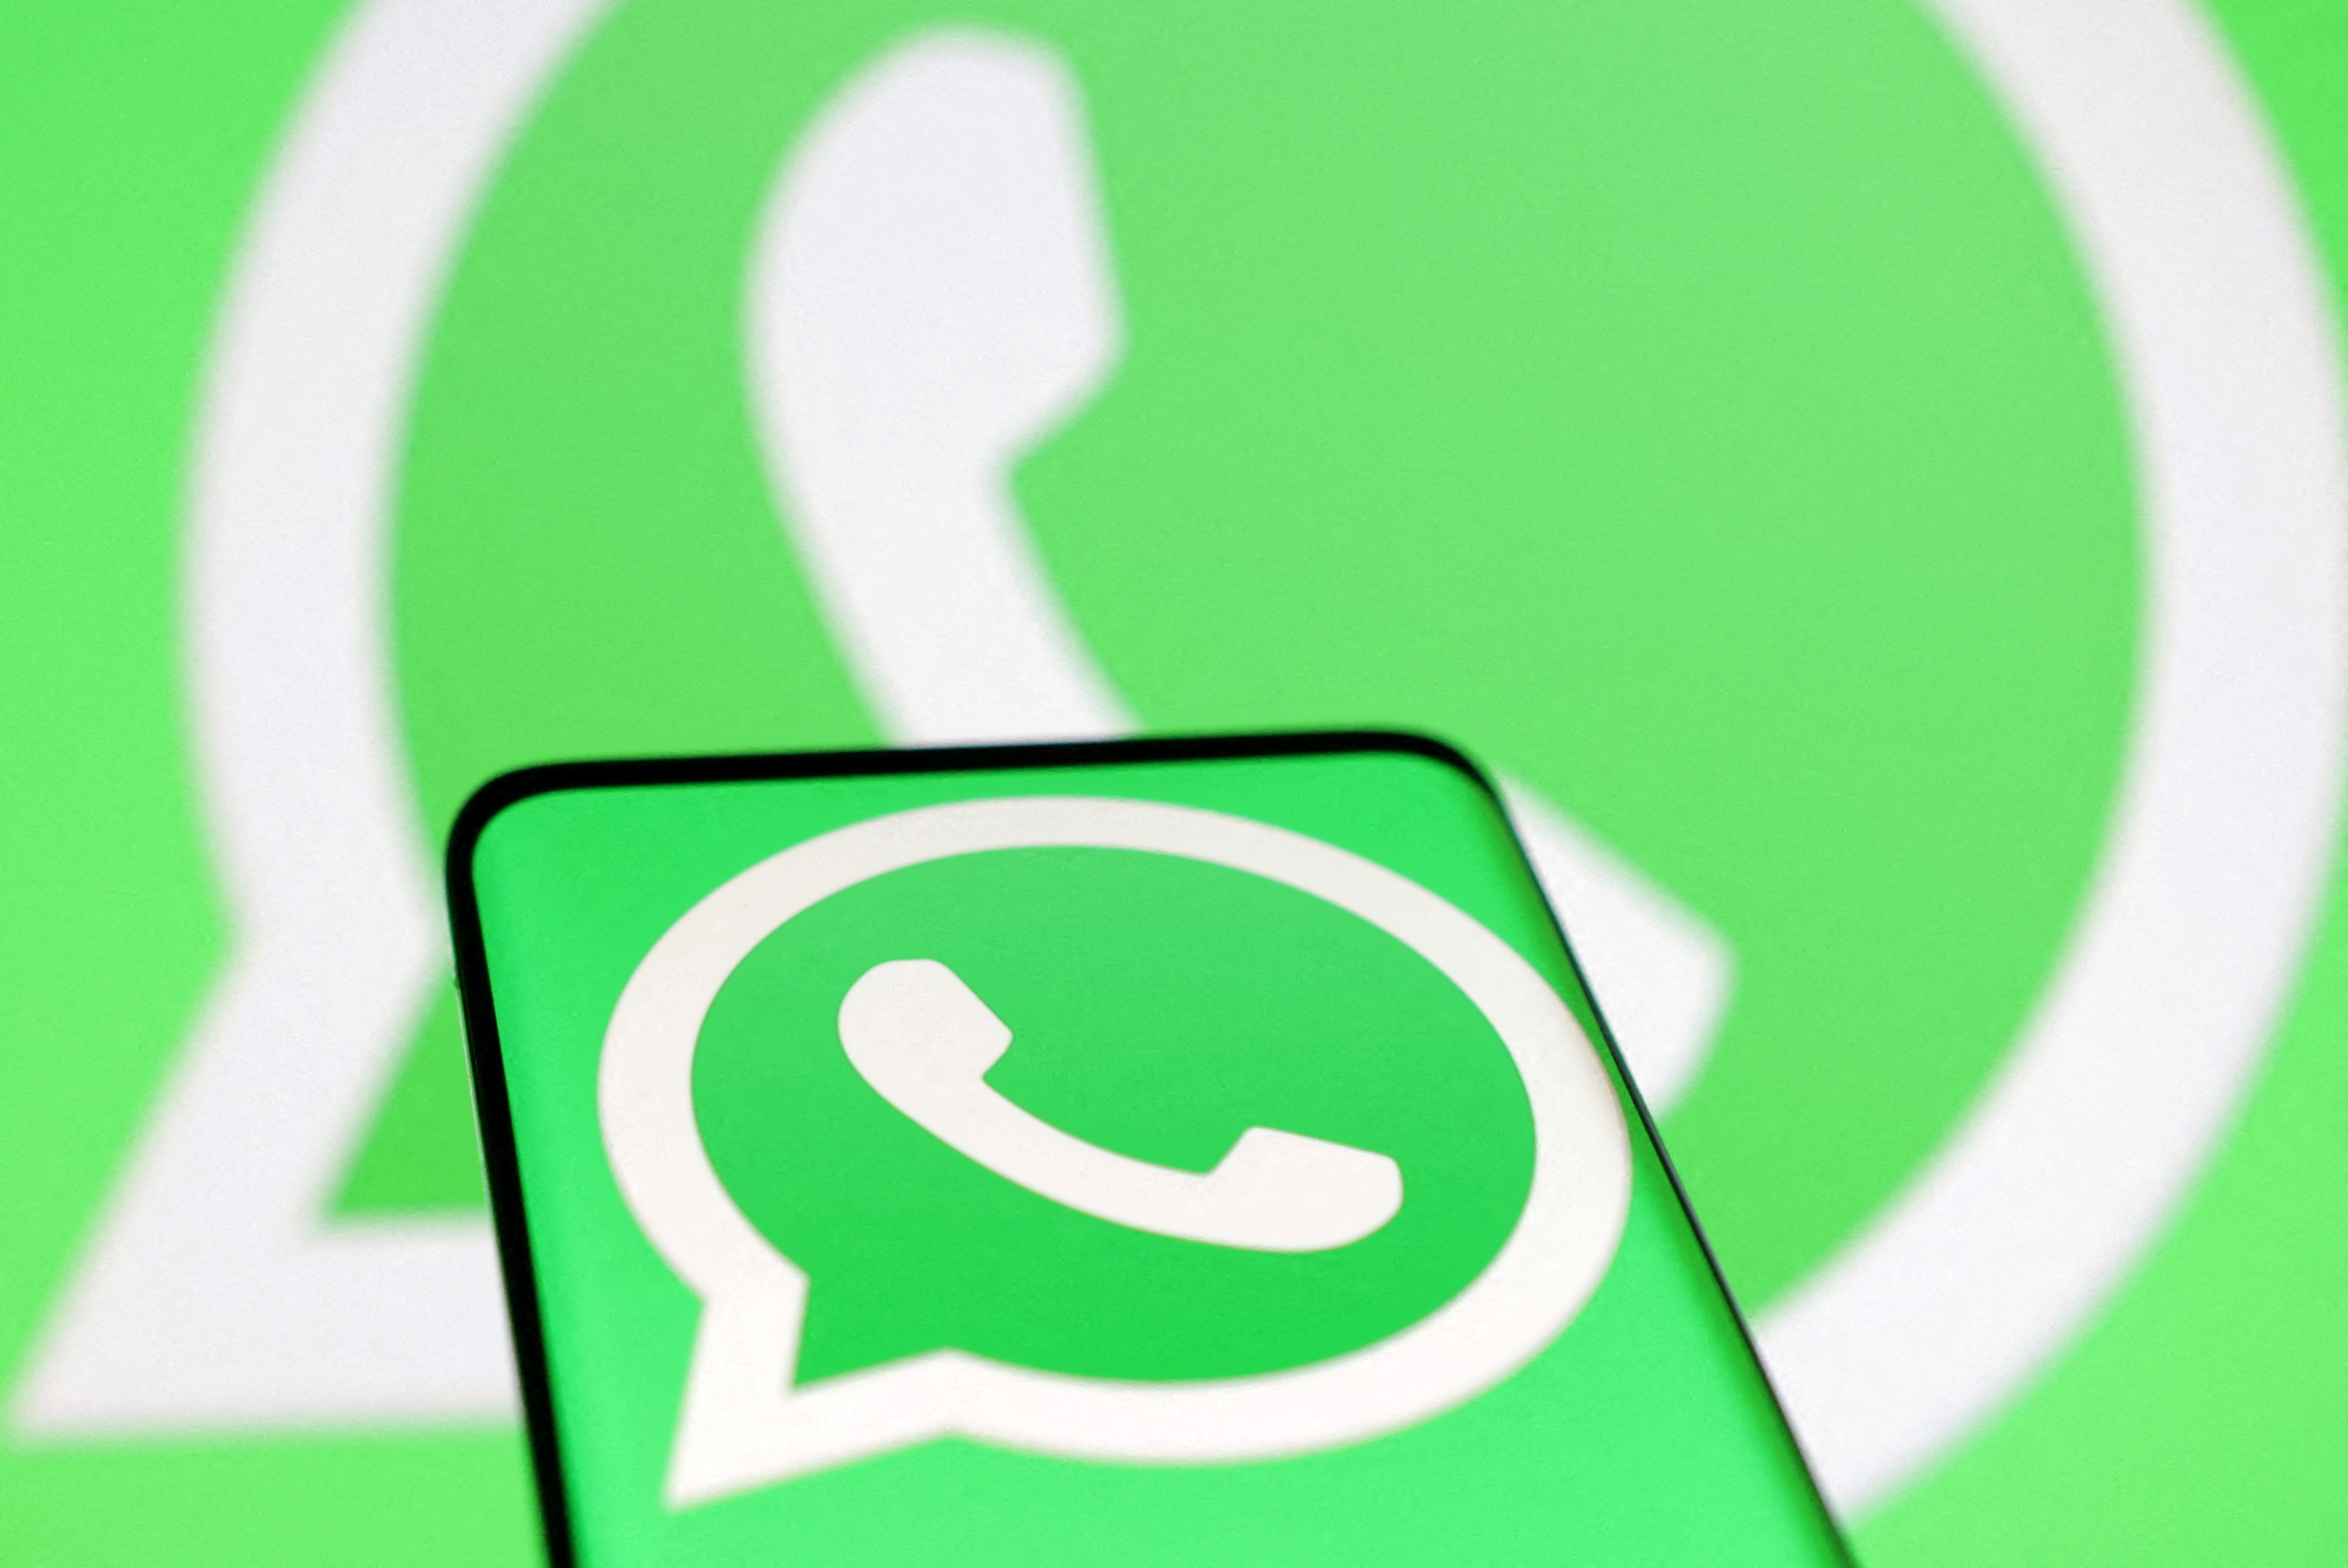   Whatsapp logo (Photo:REUTERS/Dado Ruvic/Illustration/File Photo)